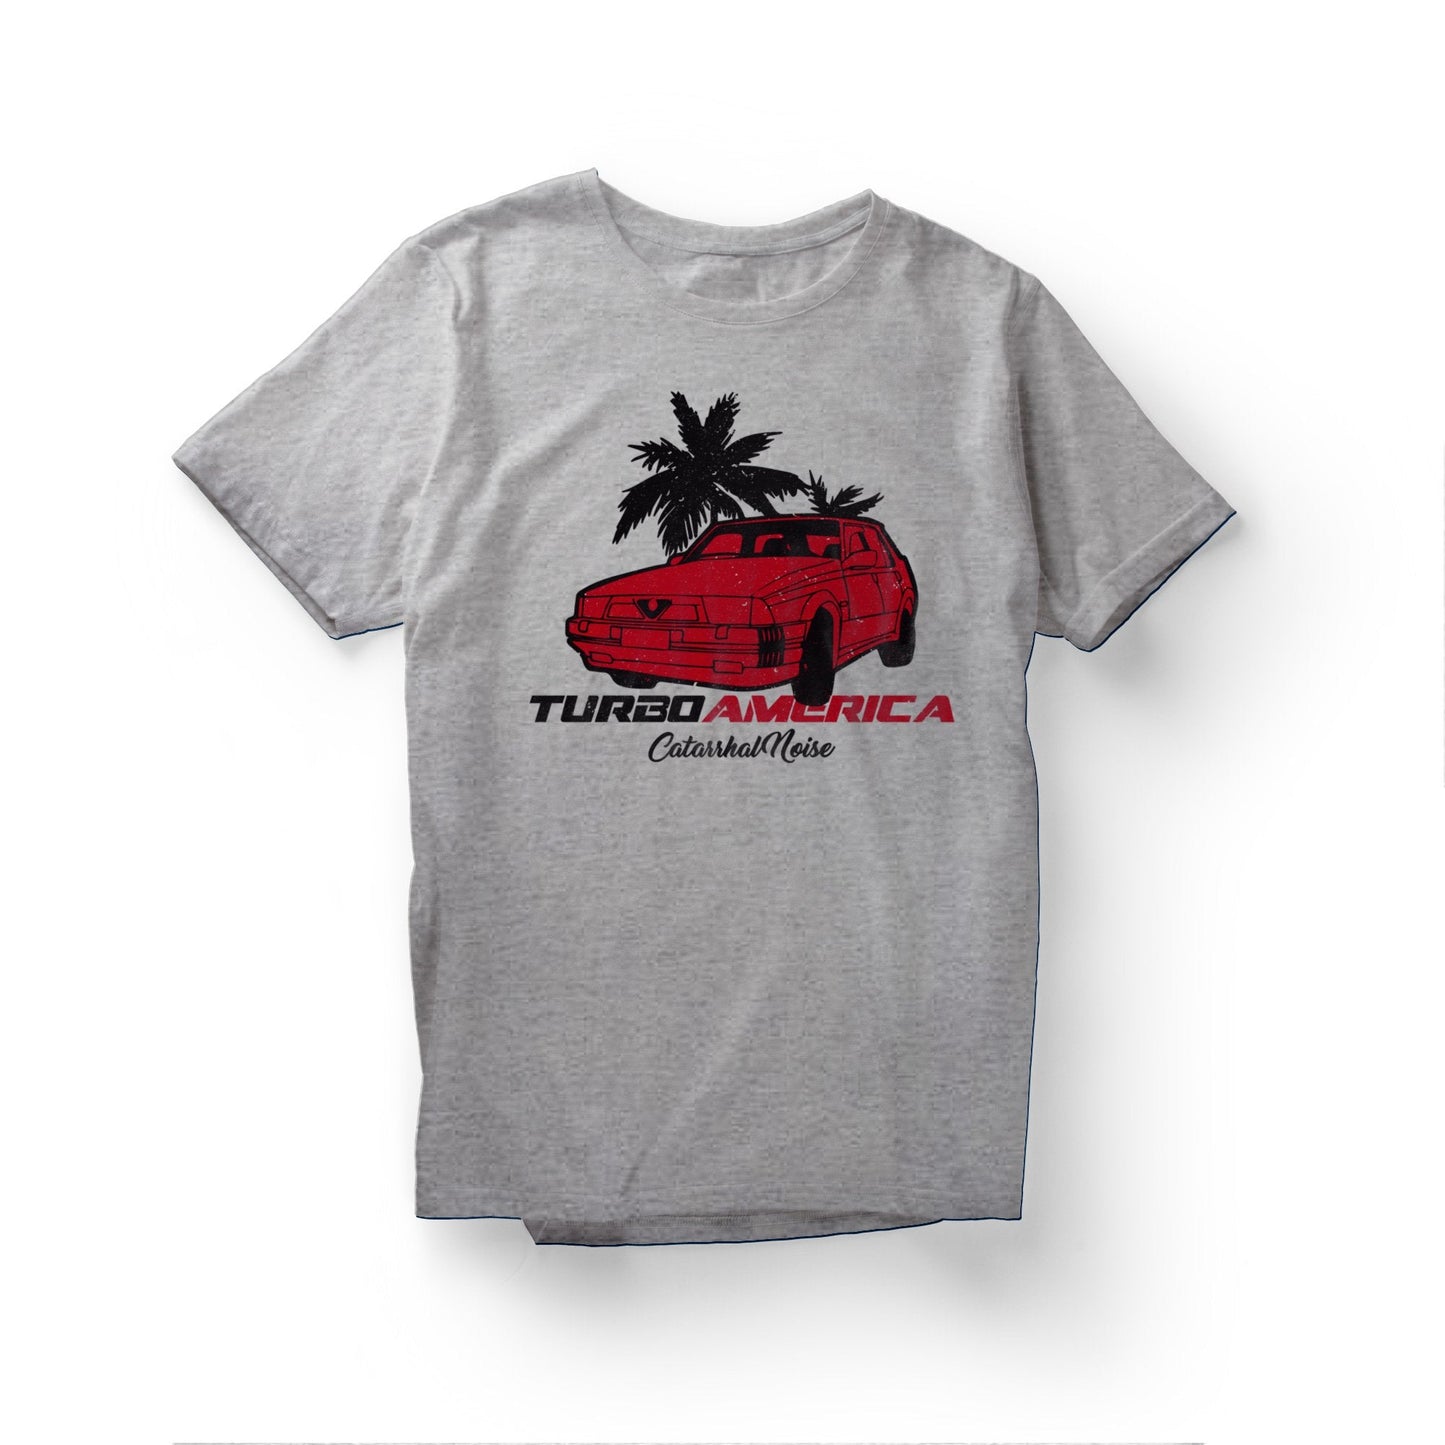 T-shirt TURBO AMERICA - CATARRHAL NOISE